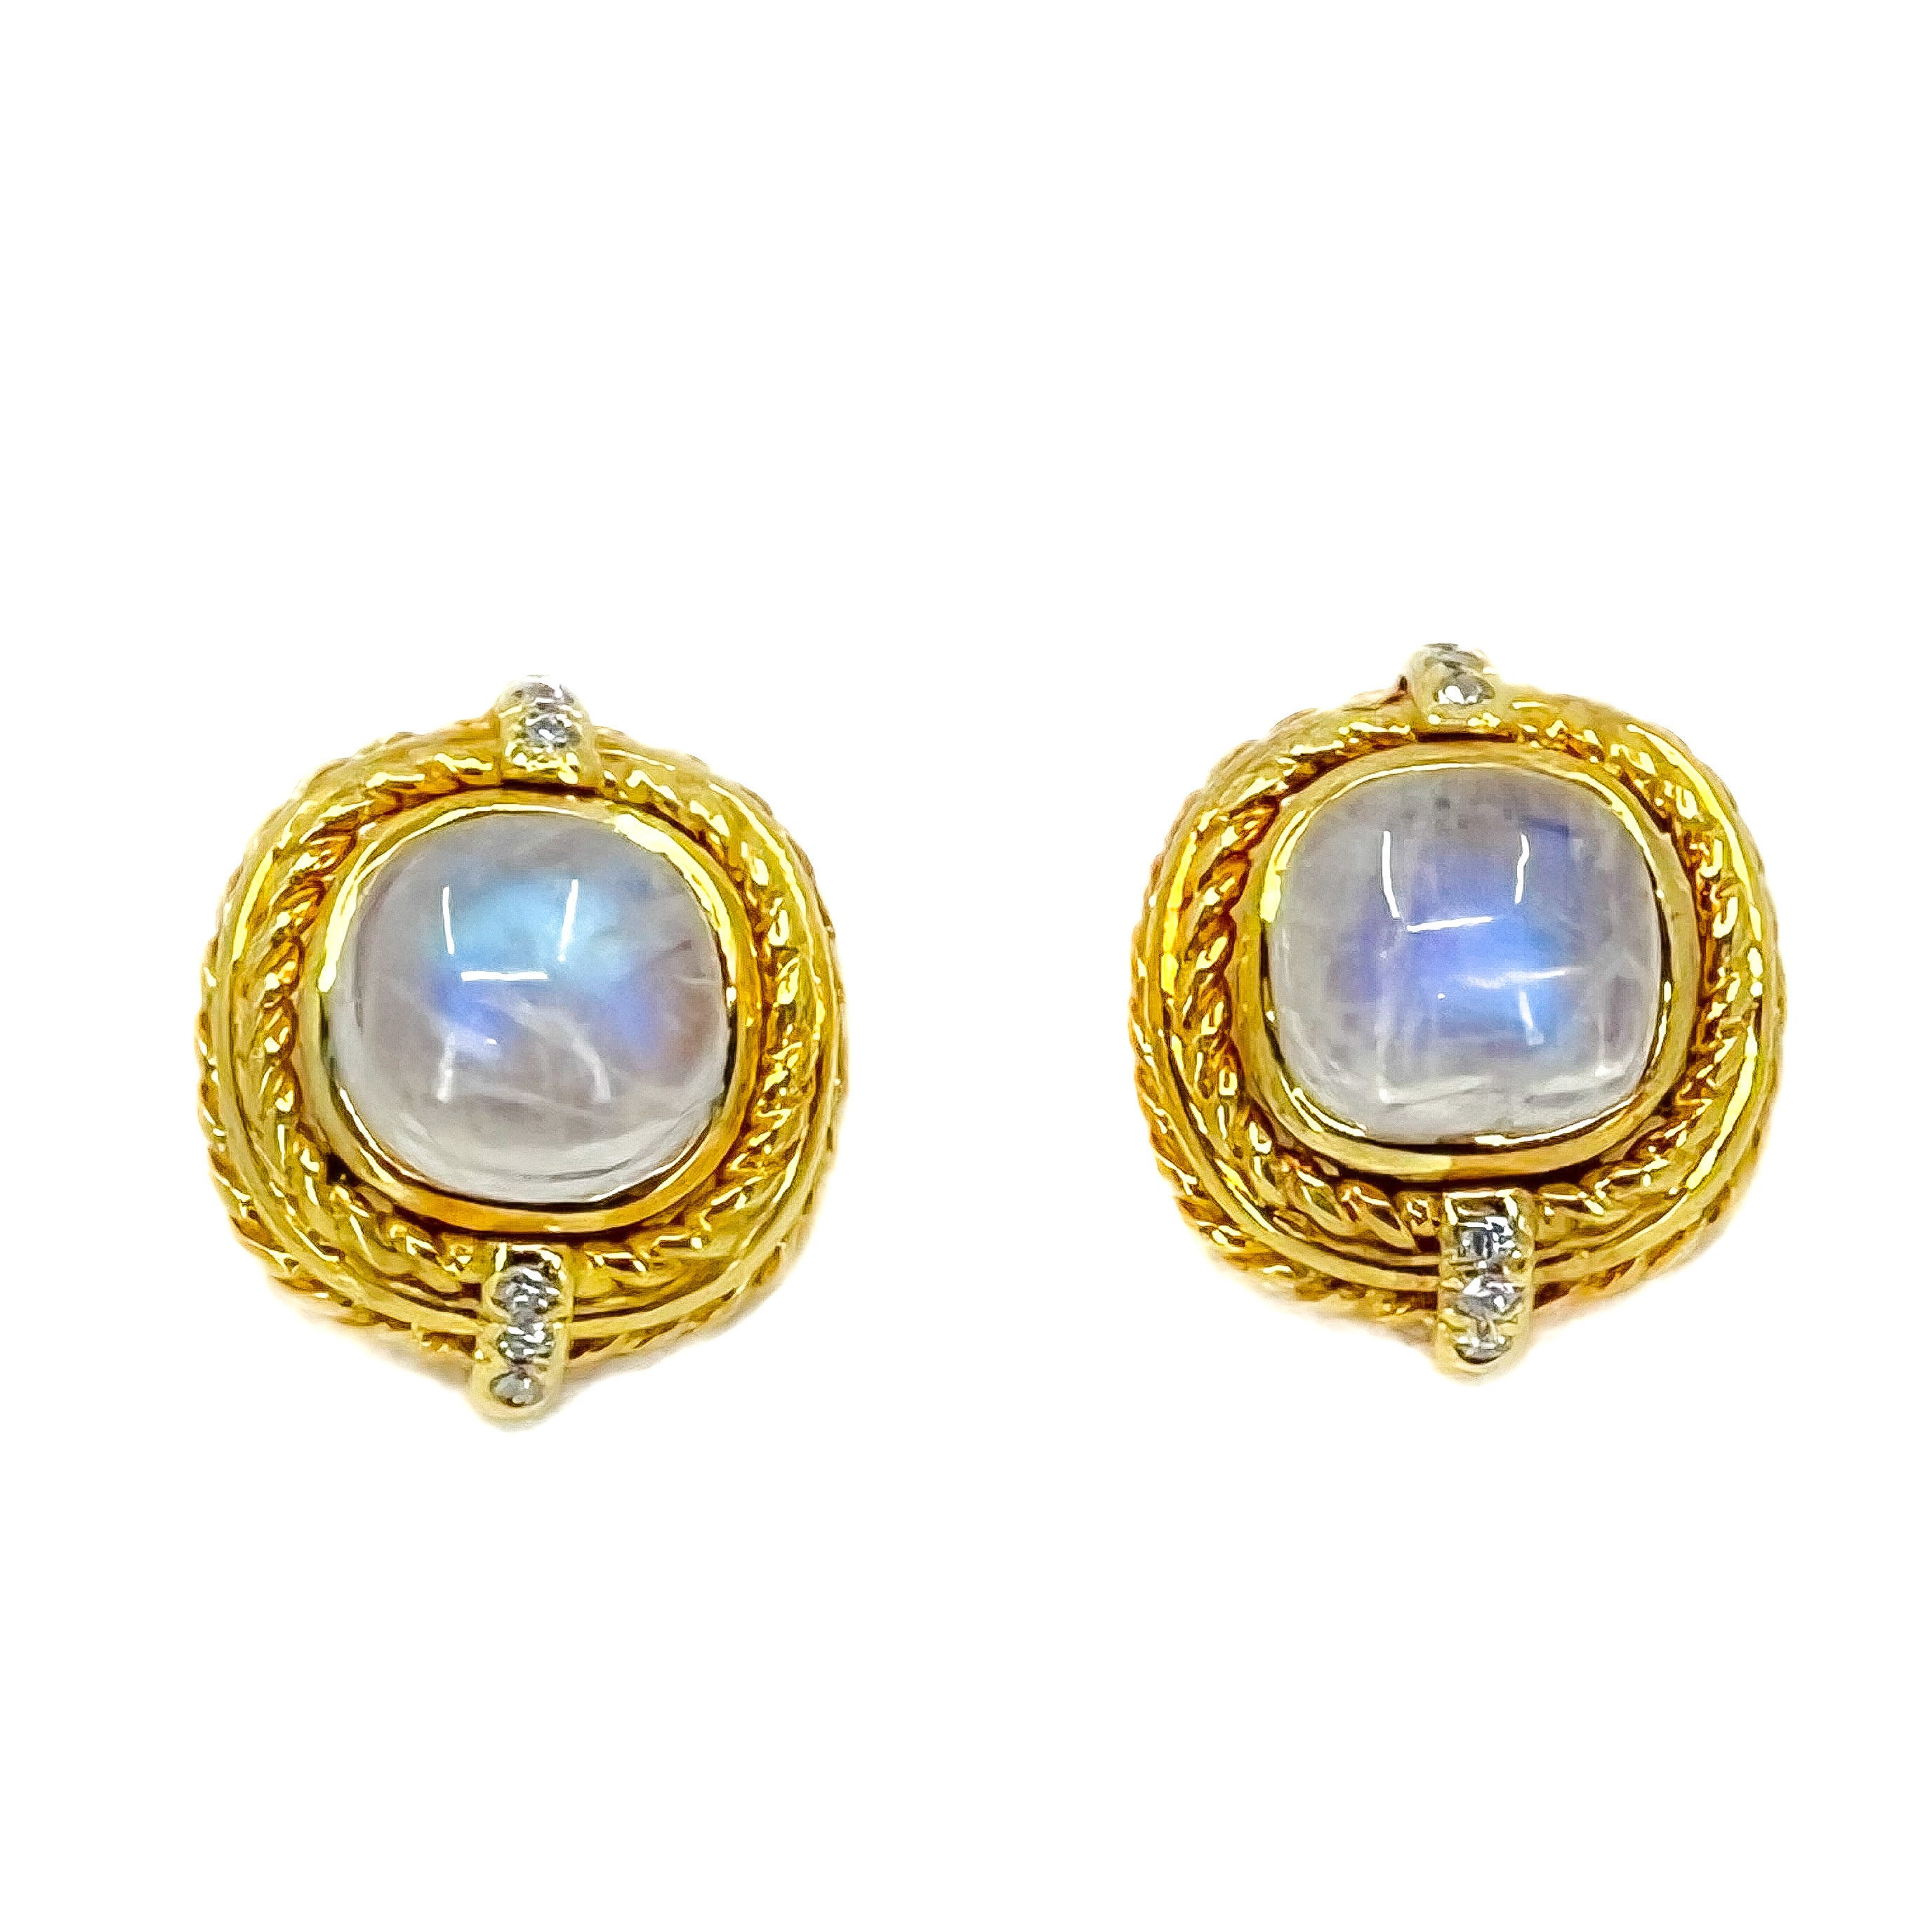 Gold, Moonstone and Diamond Earrings